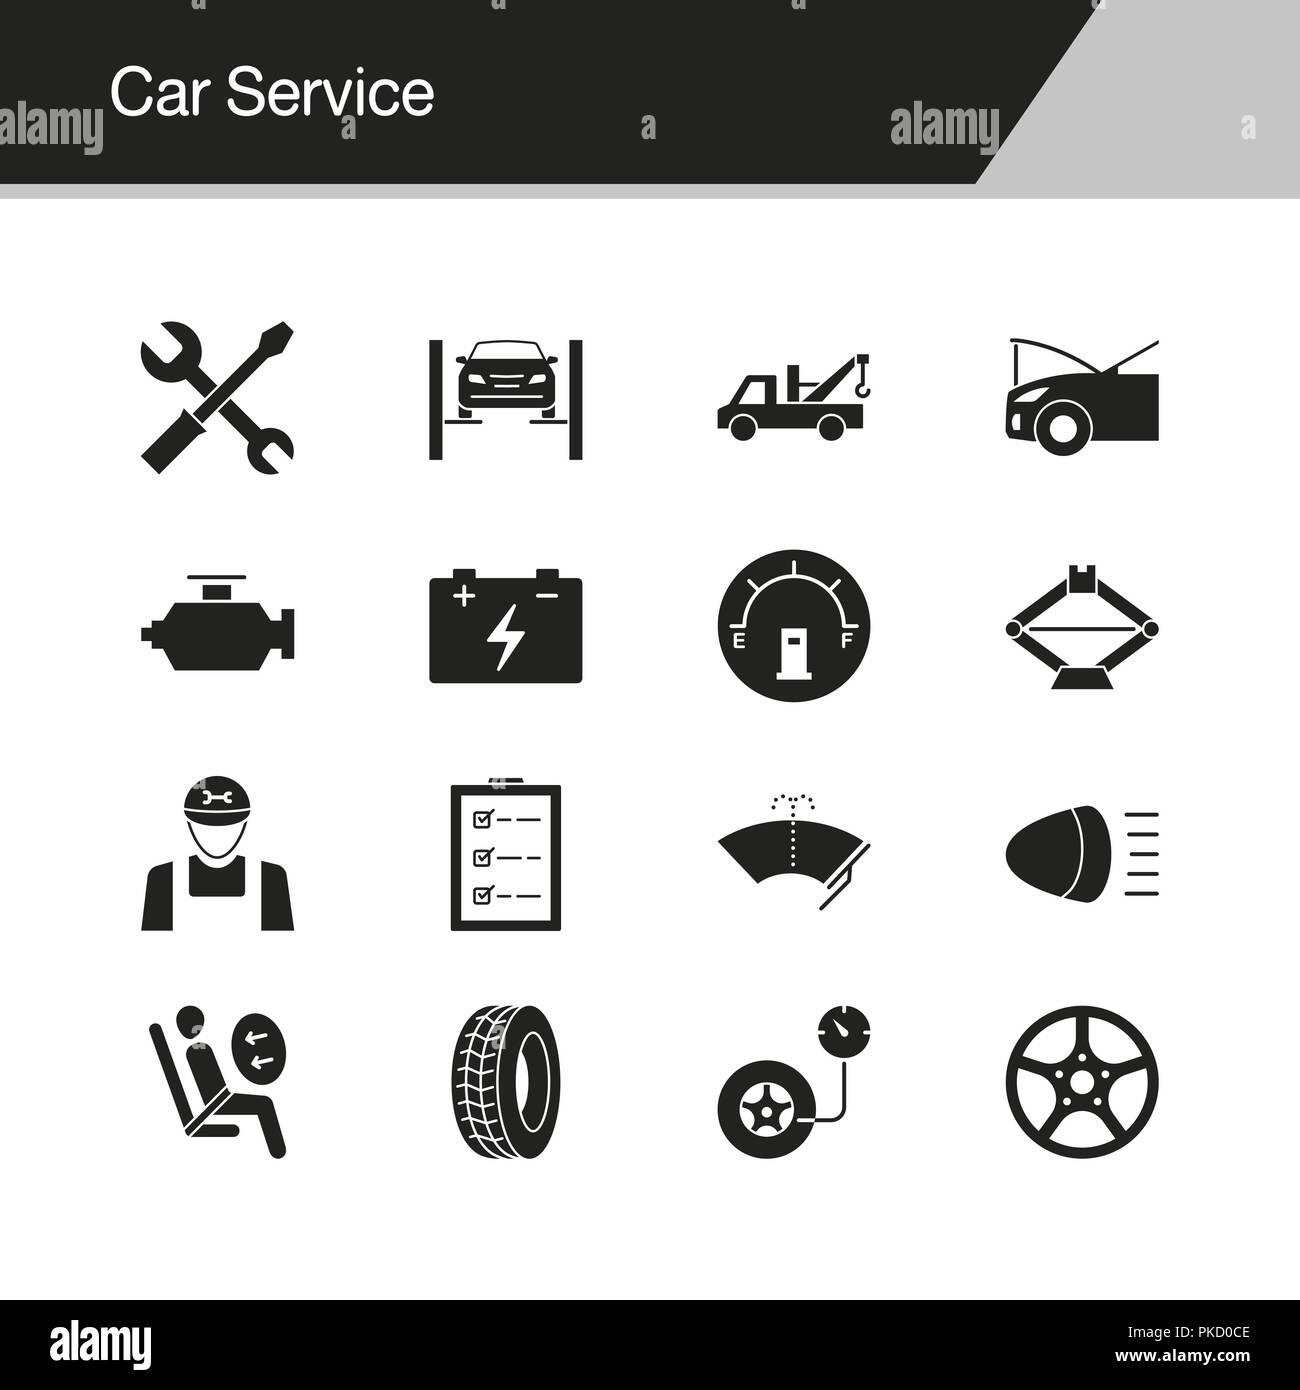 Car Service icons. Design for presentation, graphic design, mobile ...